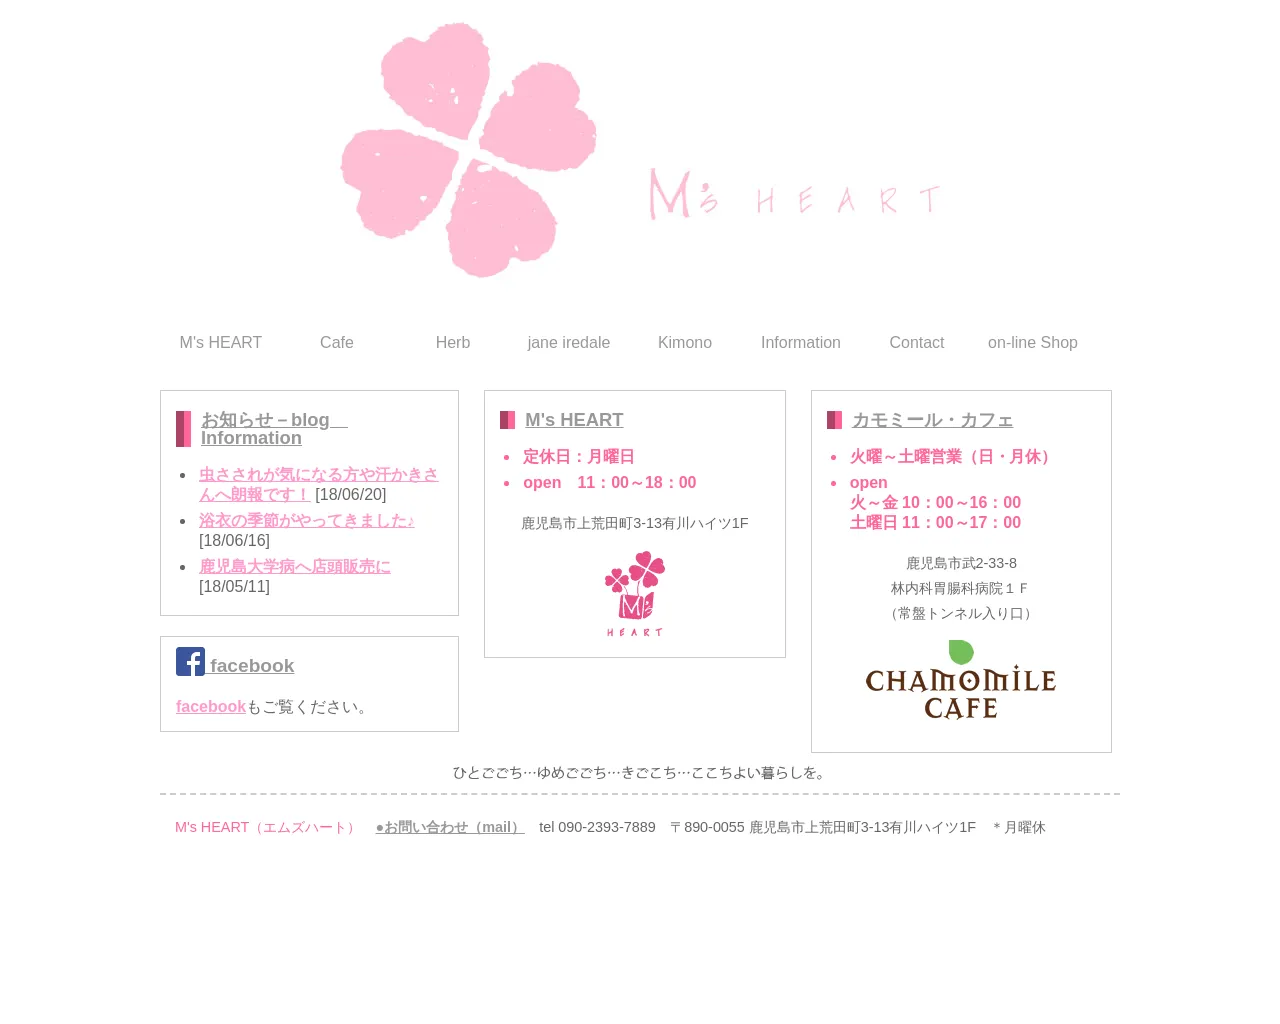 M's HEART site